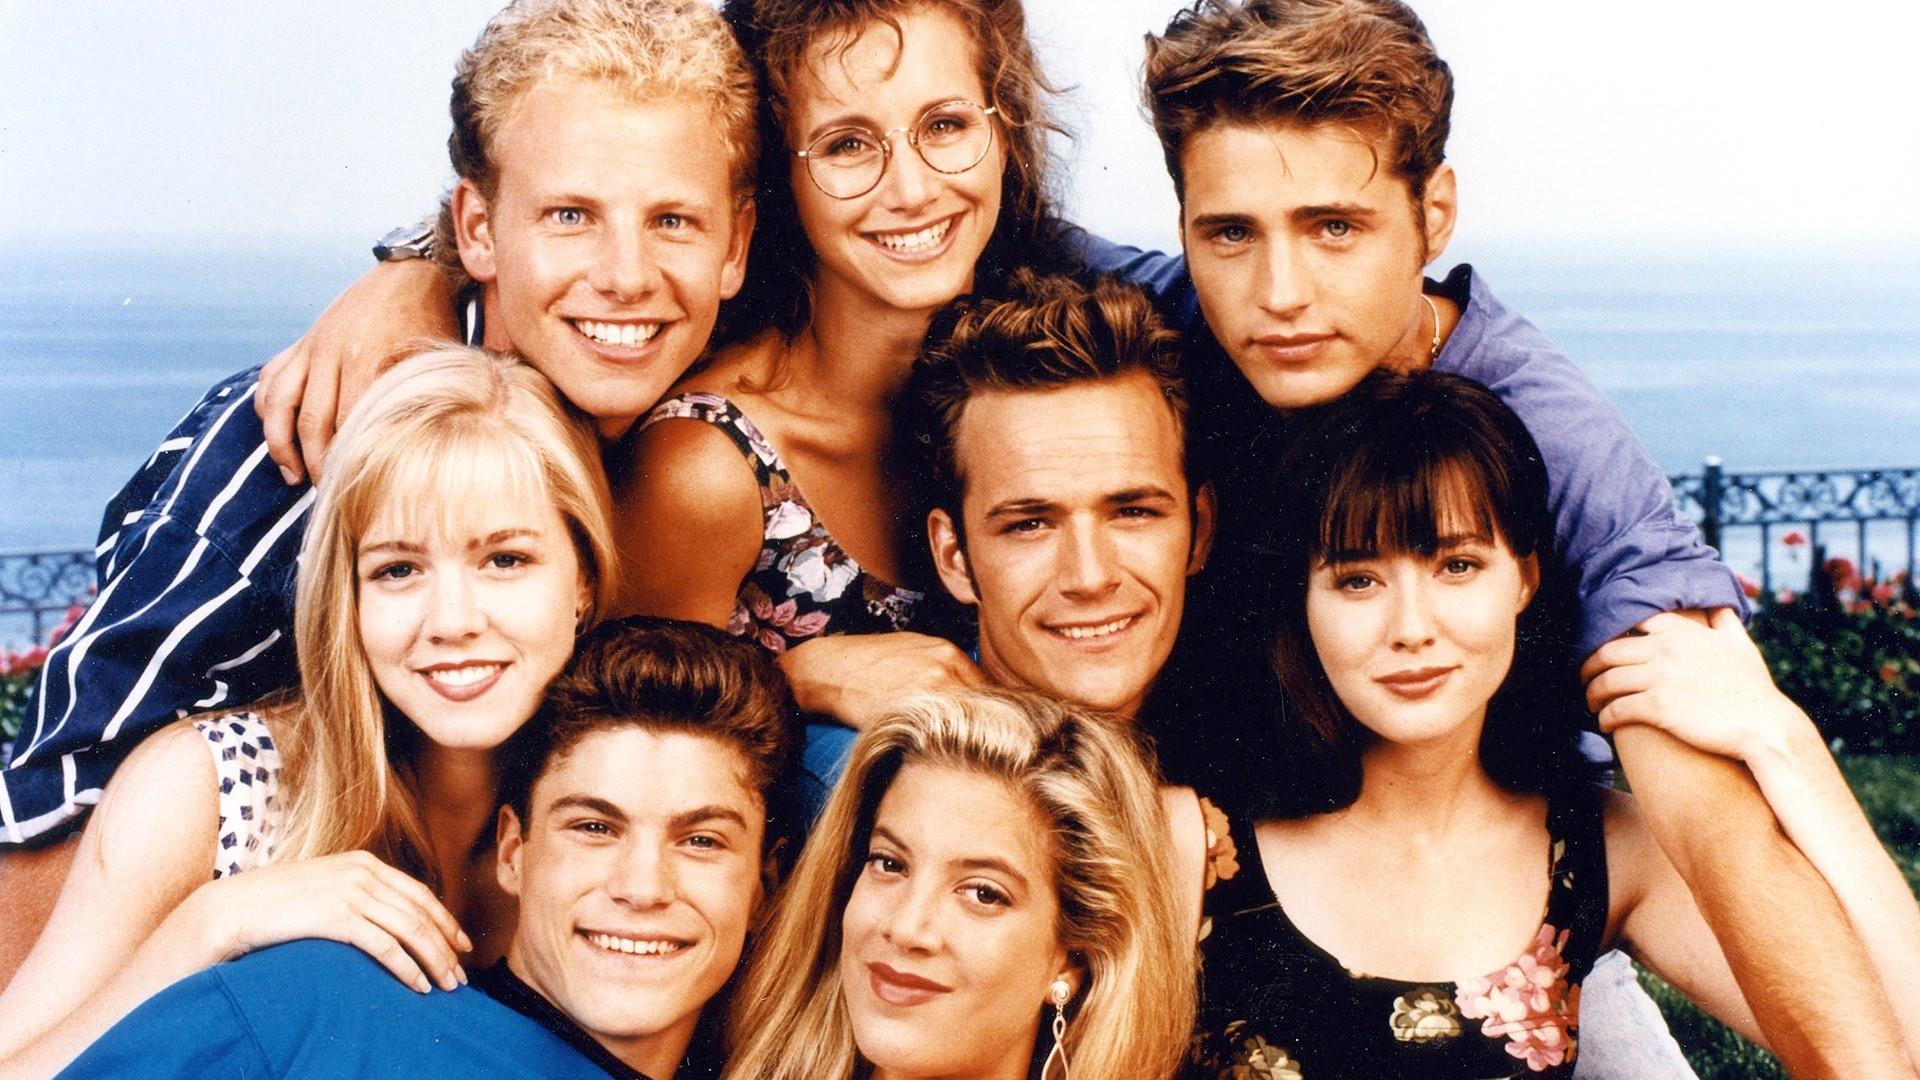 Беверли-Хиллз 90210 – 1 сезон 21 серия «Весенний танец» / Beverly Hills, 90210